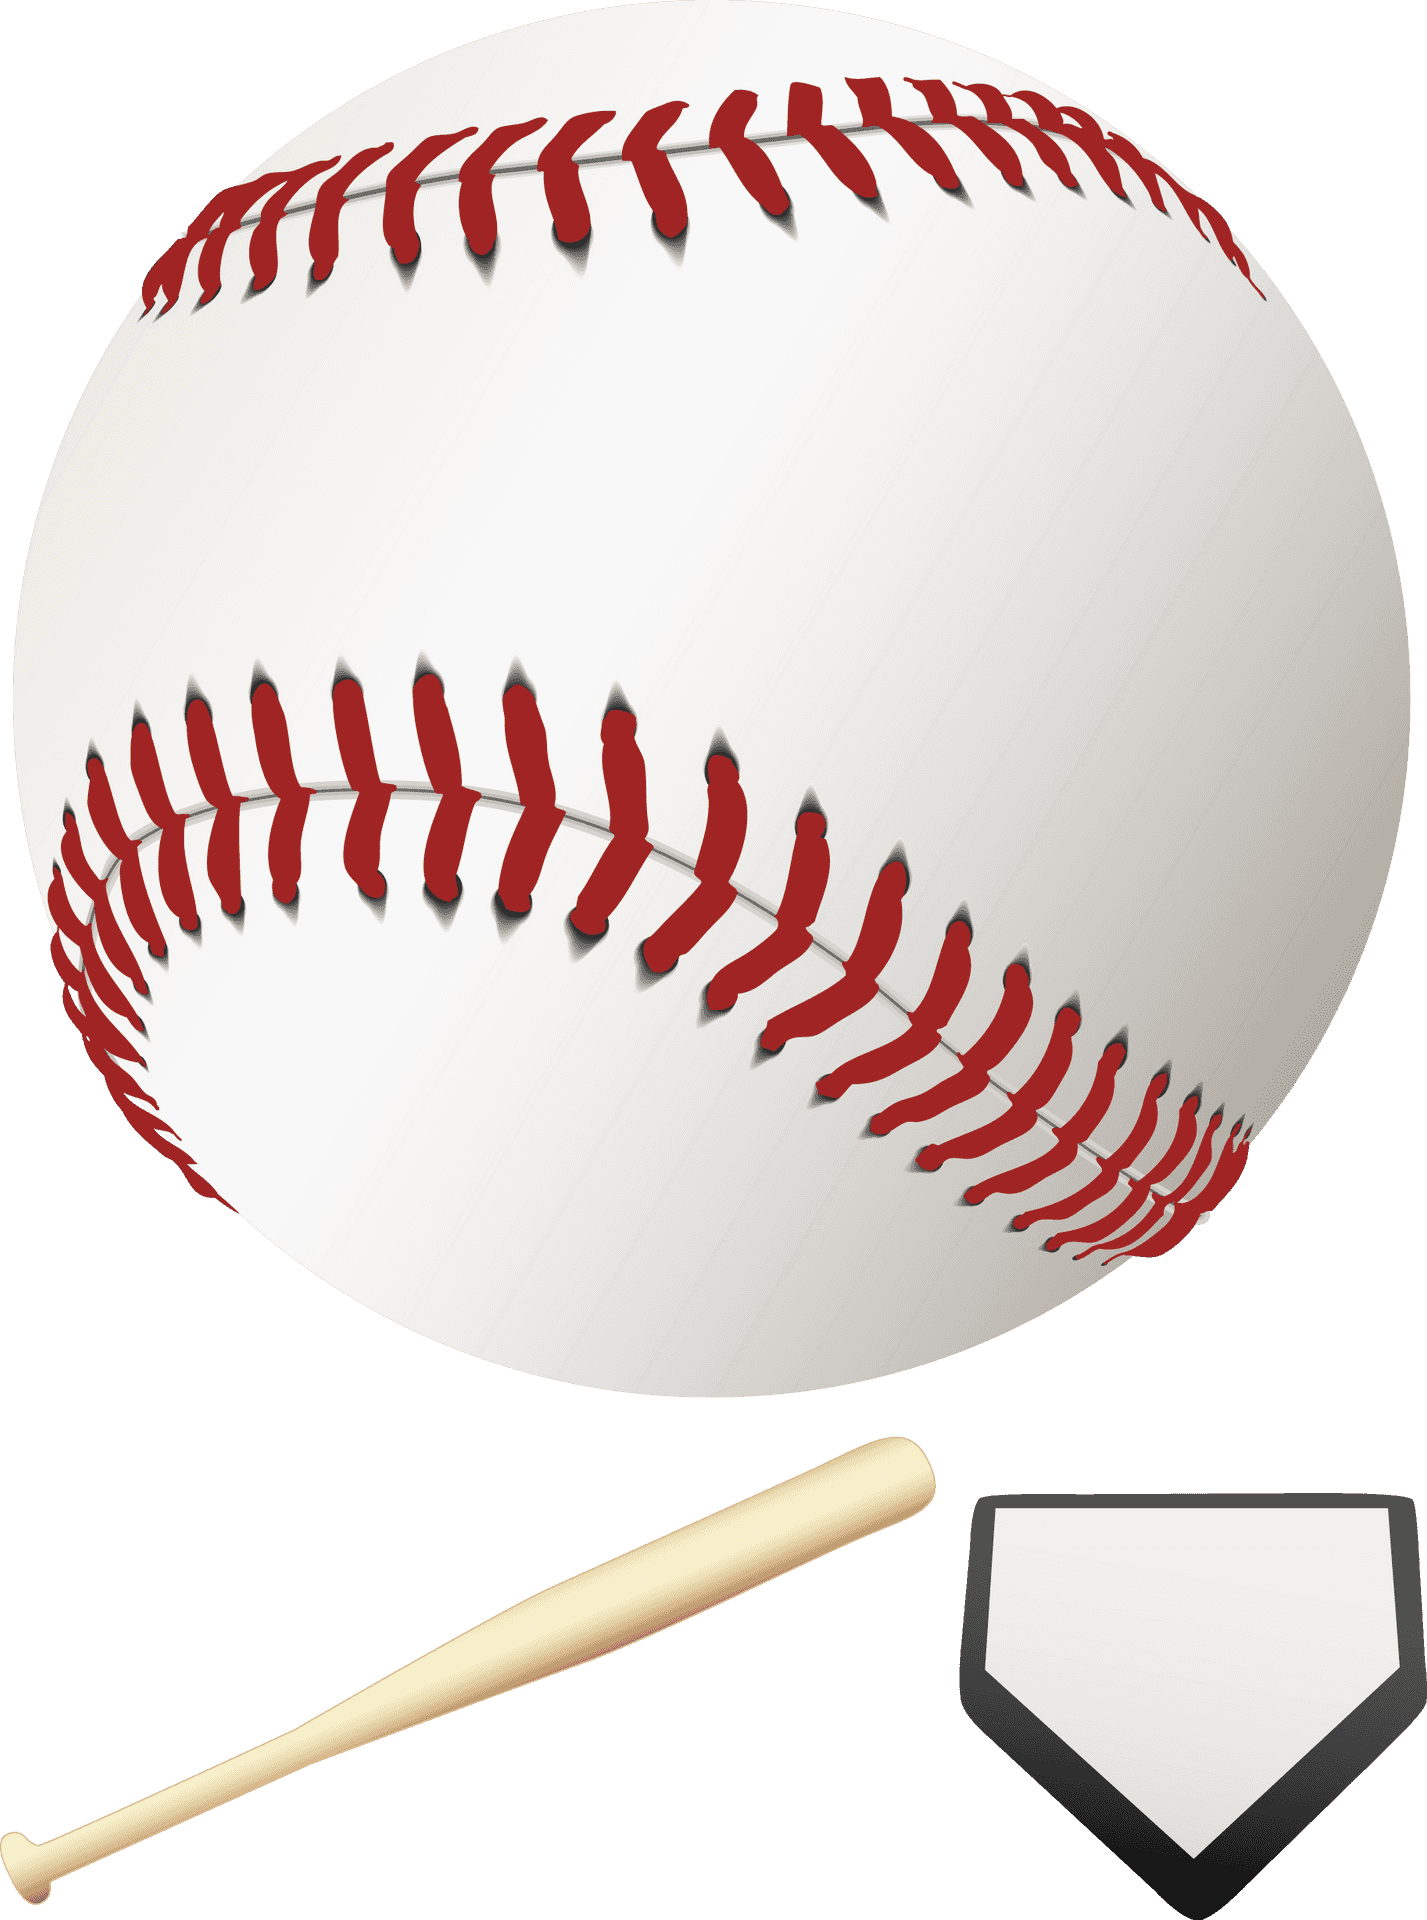 Baseballand Equipment Illustration PNG image